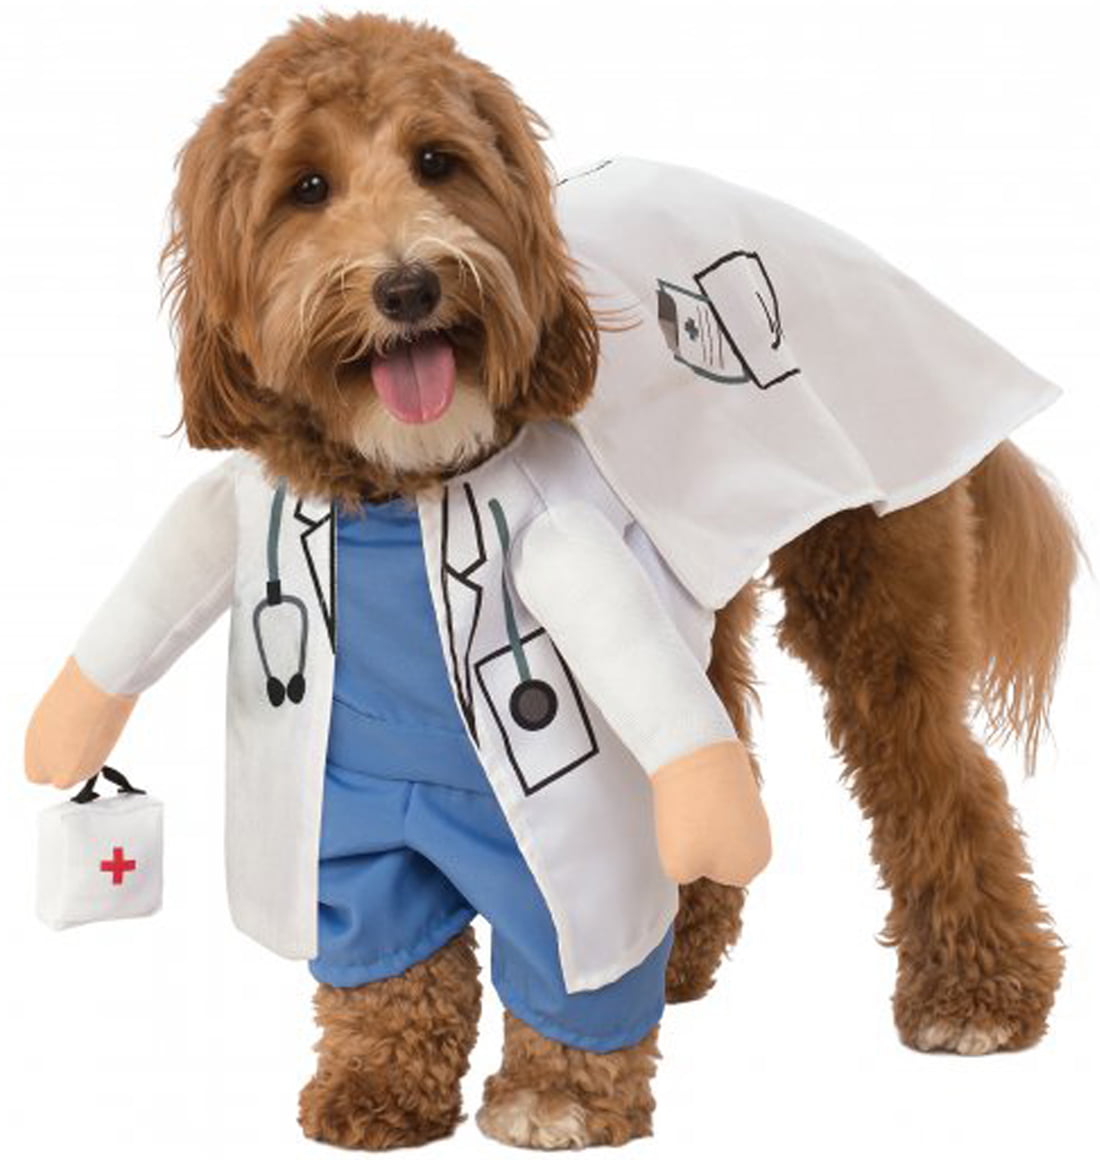 pet dog doctor near me